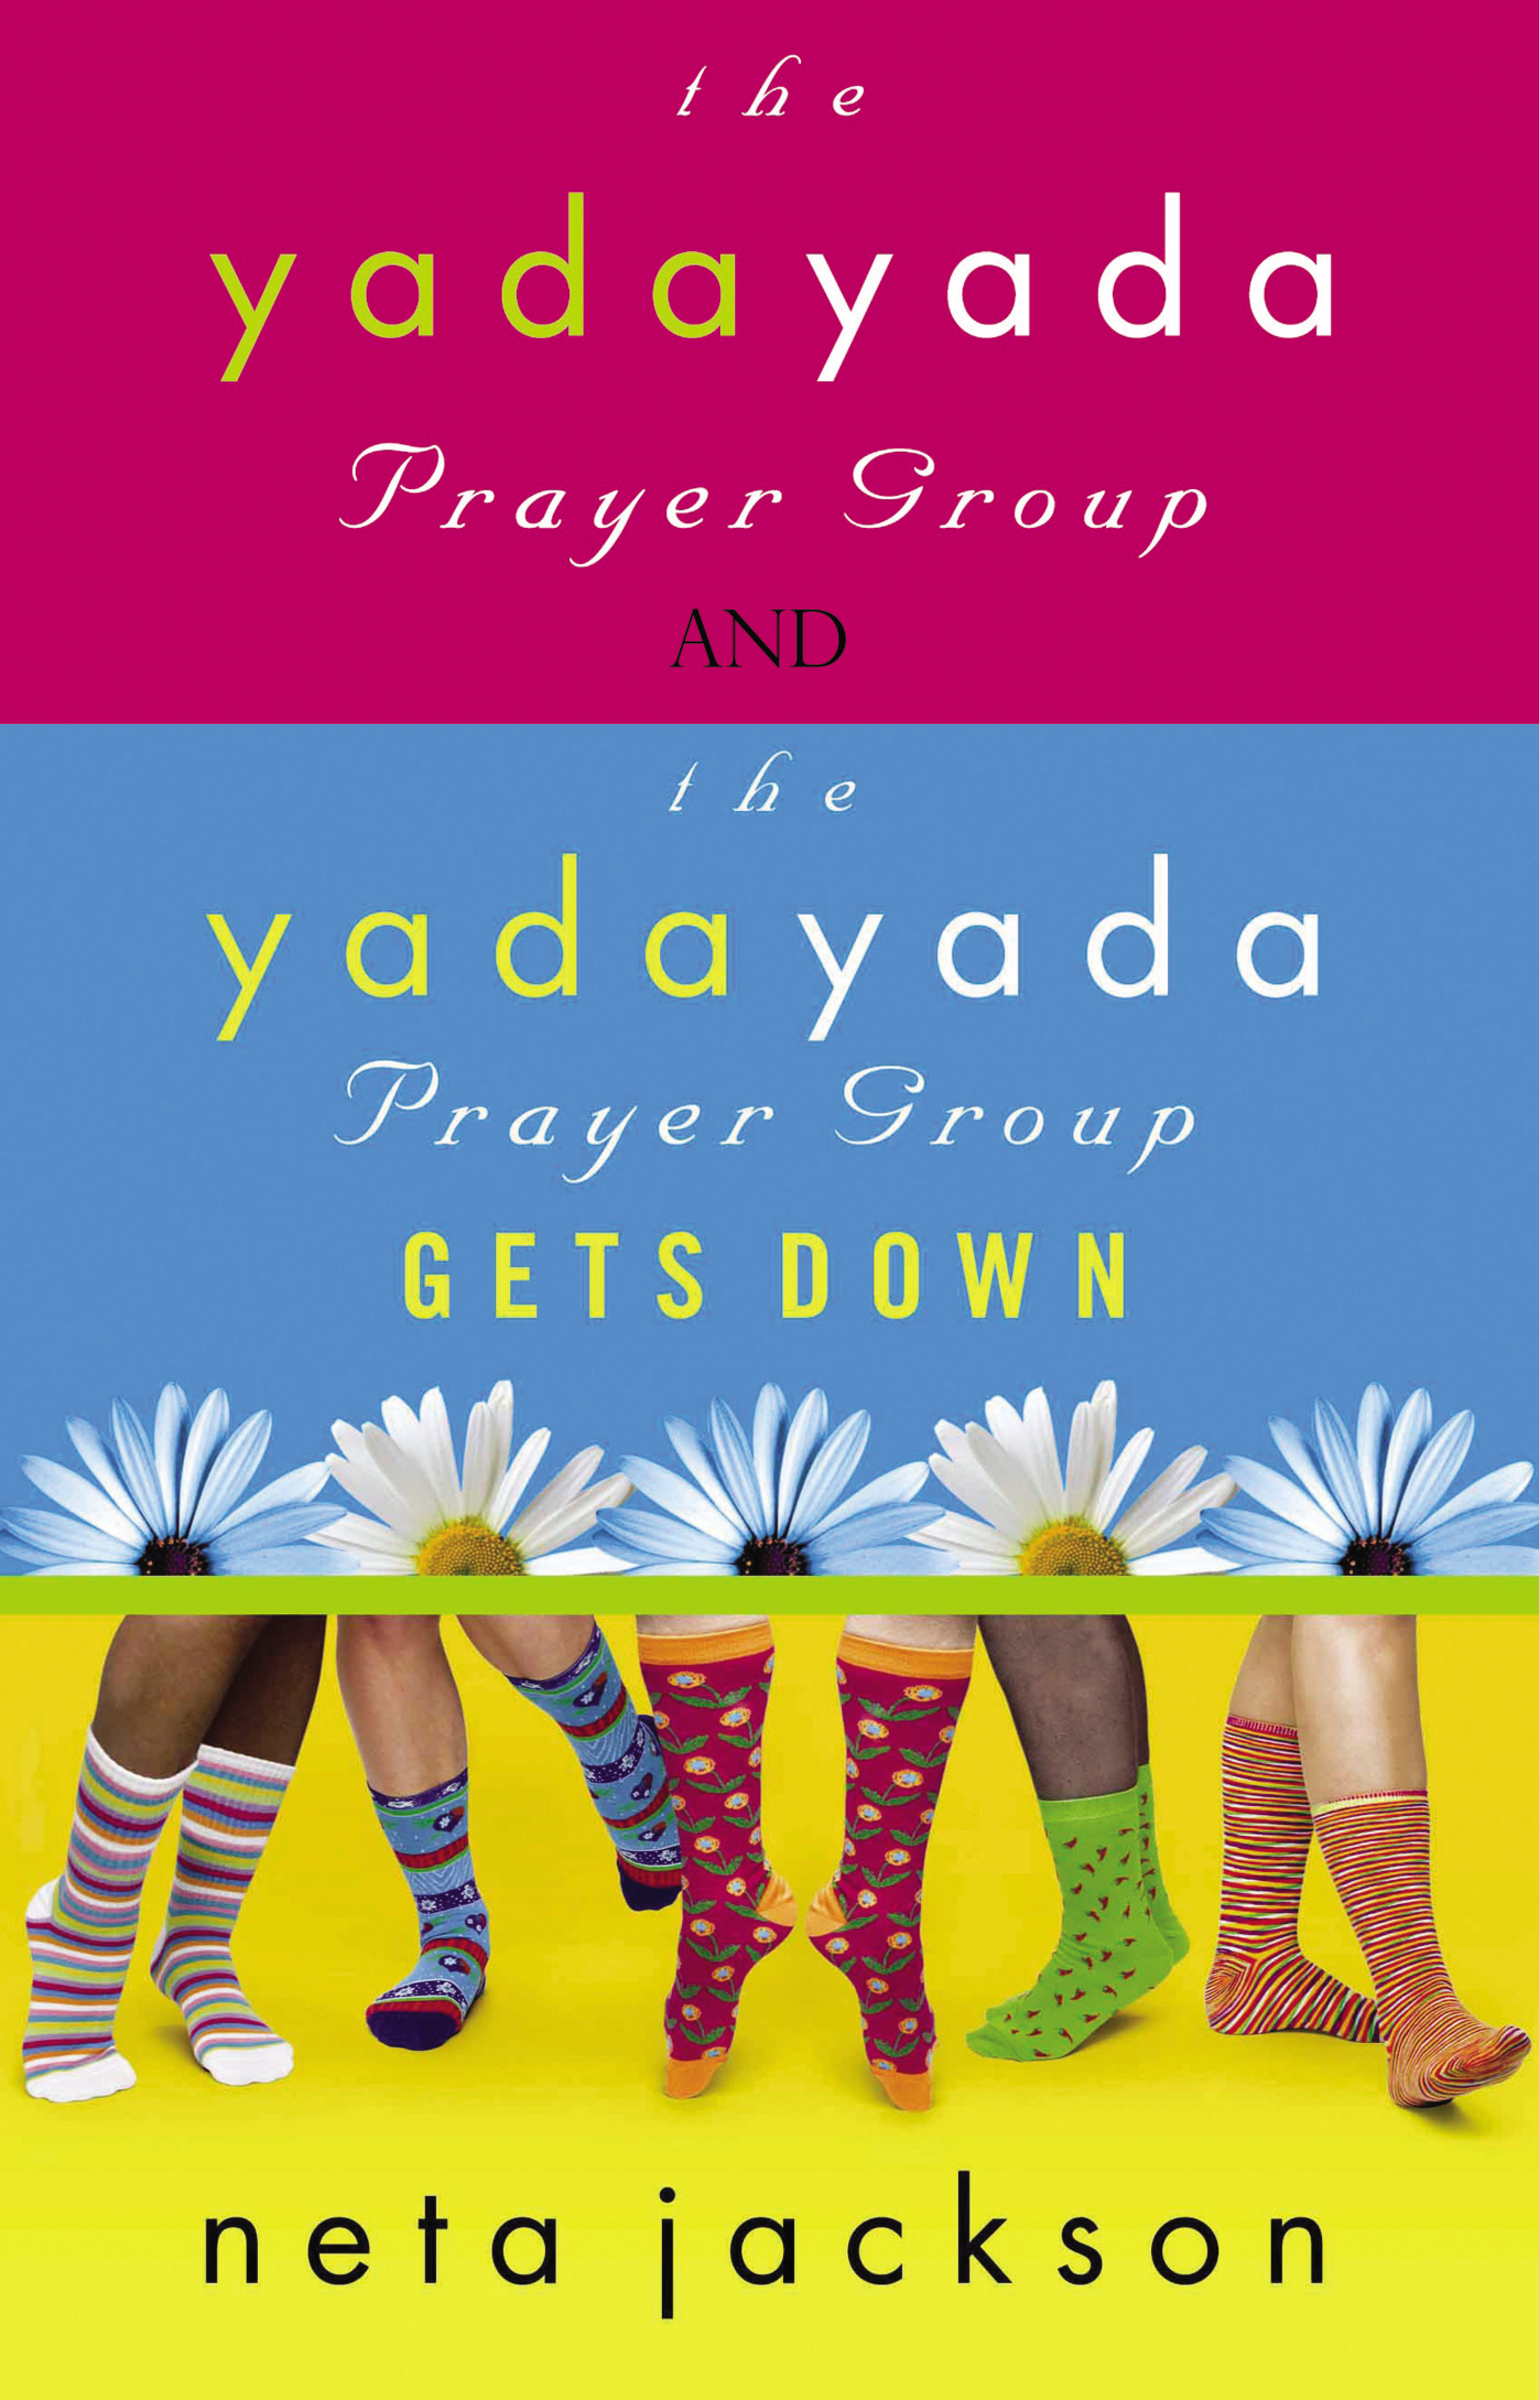 Yada Yada prayer group cover image